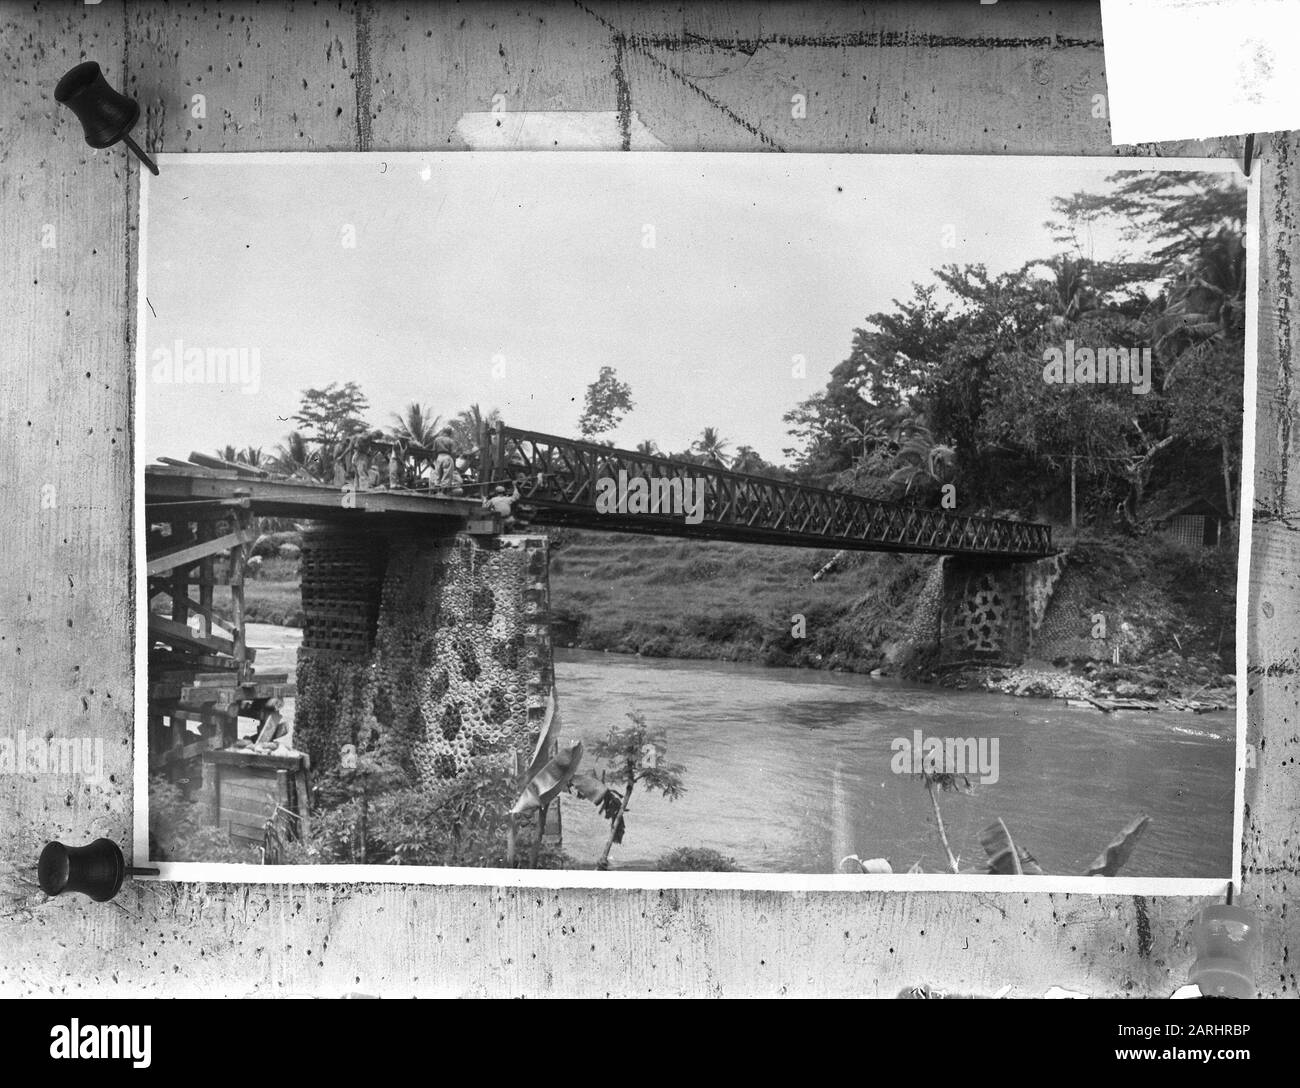 Con la 1st compagnie Veldgenie van het KNIL un ponte Bailey è stato posto vicino Bandjarnegara sopra il kali Serajoe Data: Marzo 1949 luogo: Indonesia, Indie orientali olandesi Parole Chiave: Predate, bailleybruggen Foto Stock